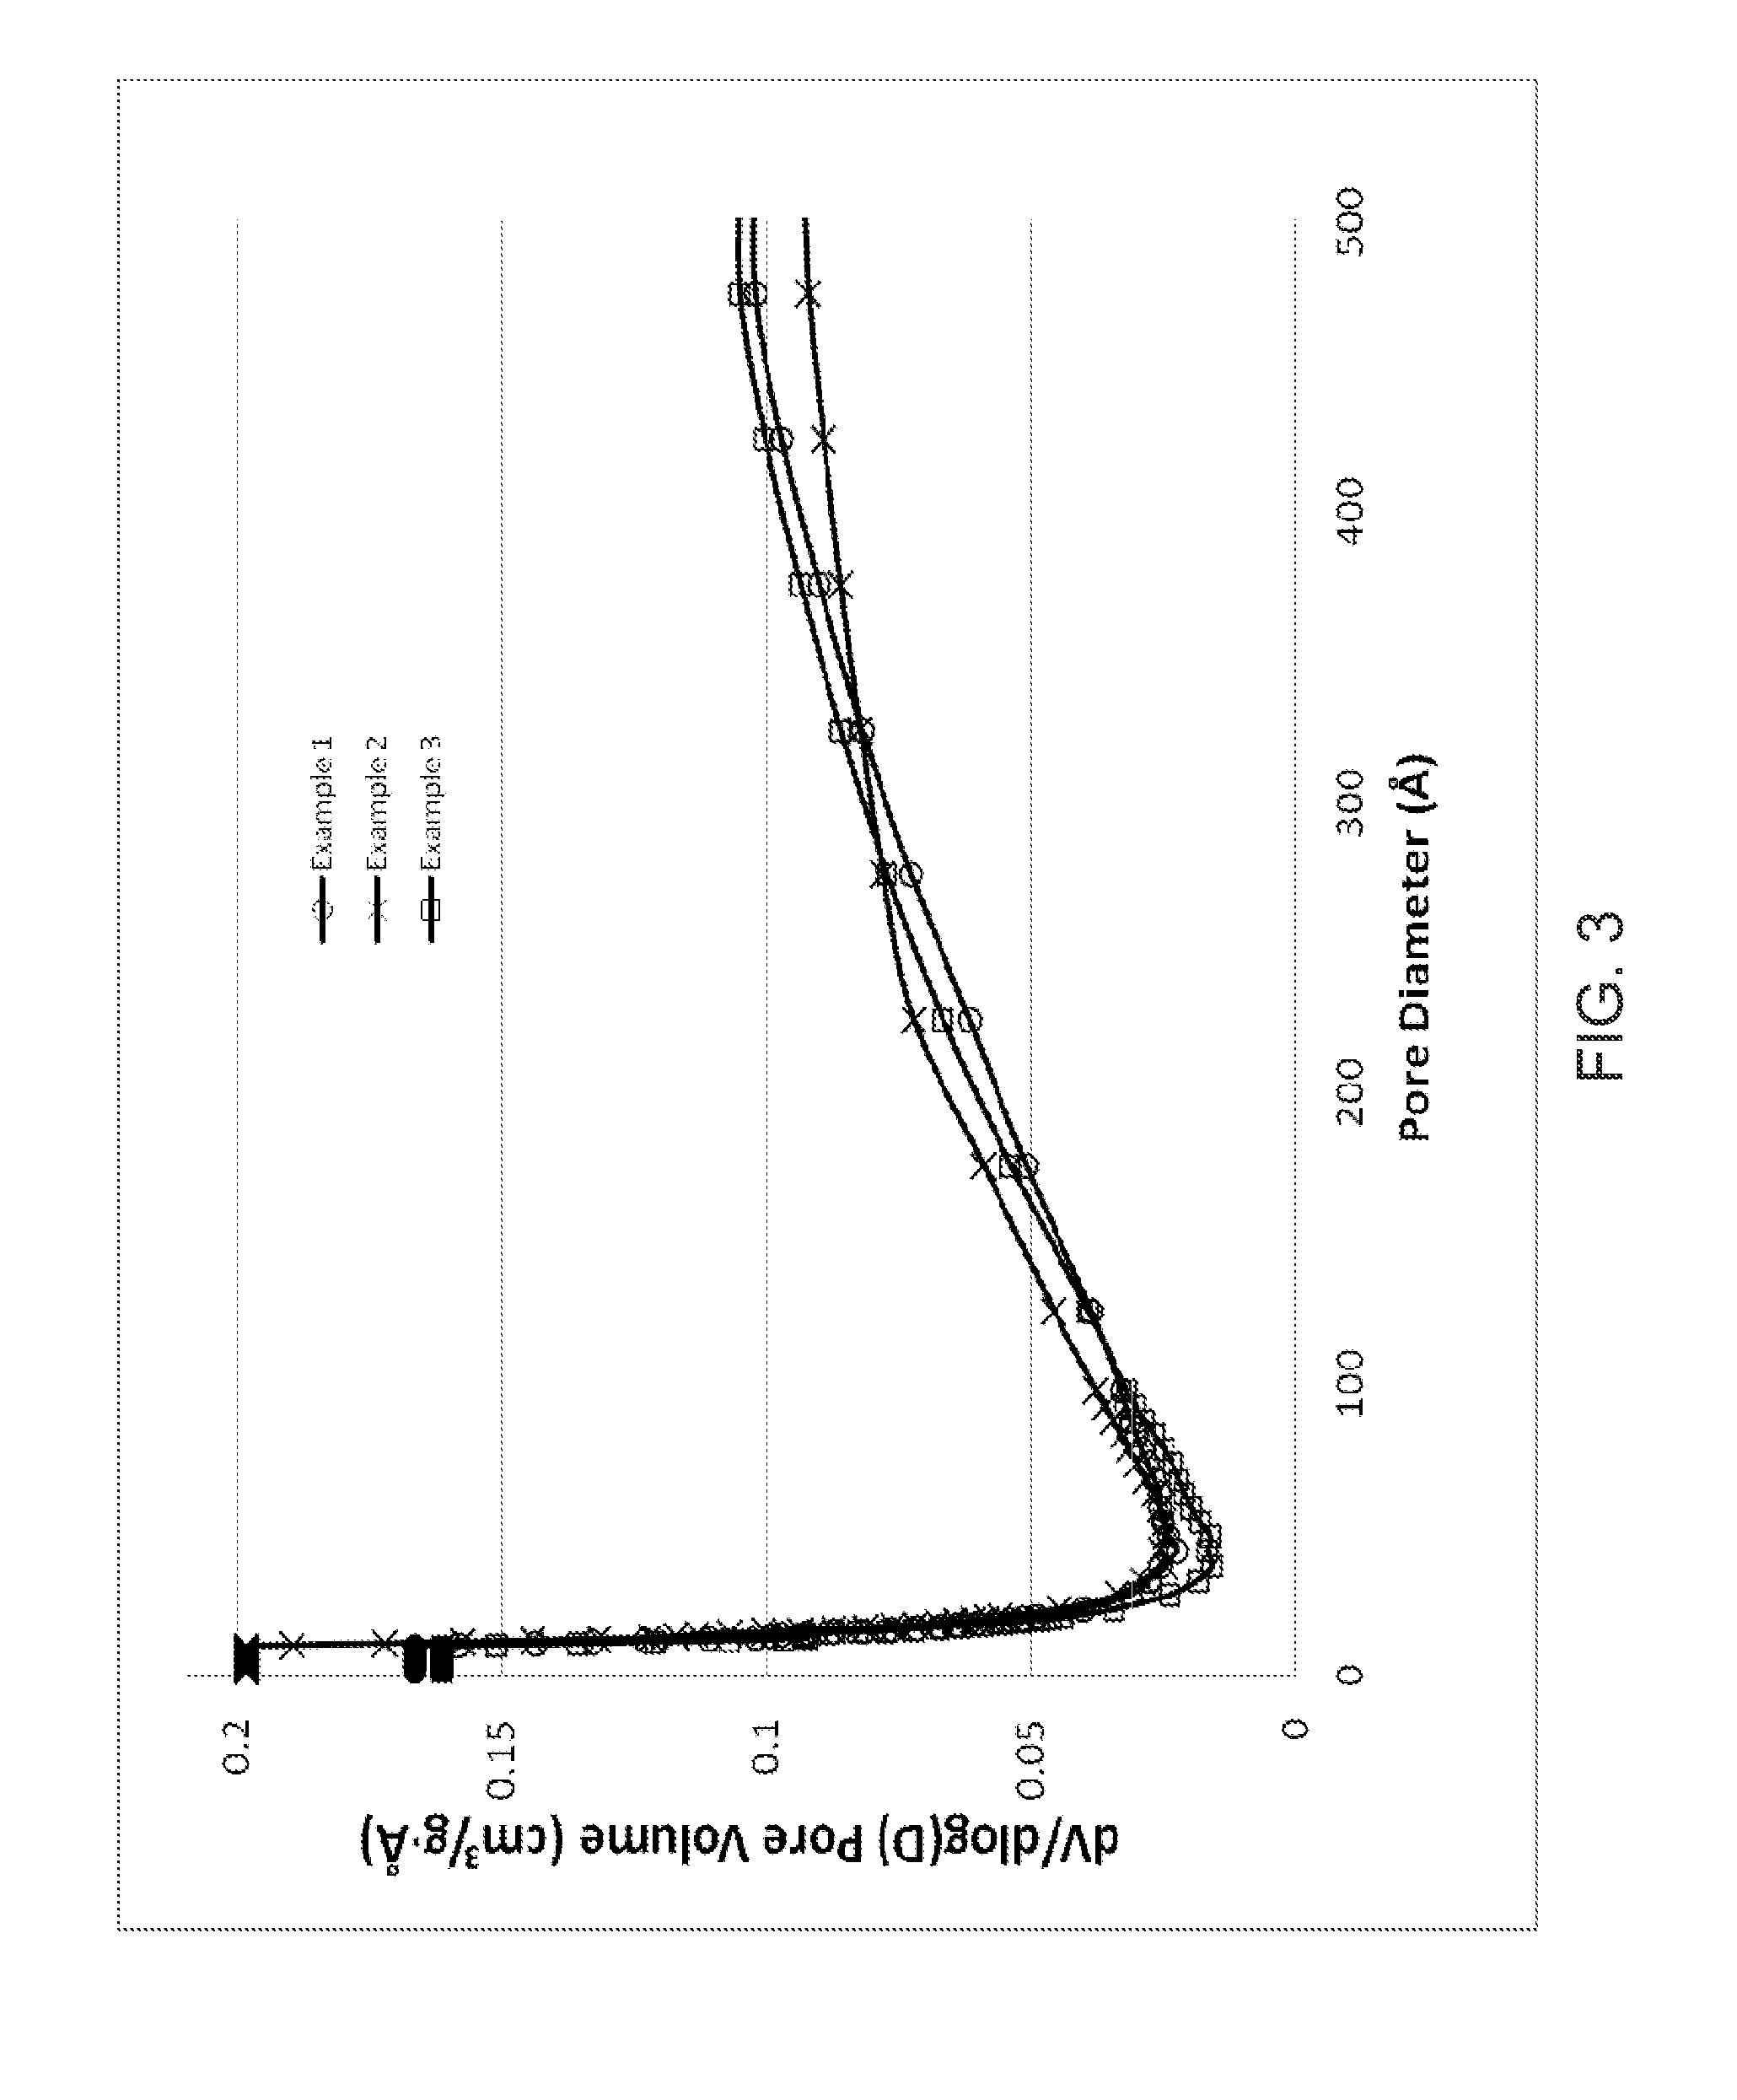 Dehydrocyclodimerization using uzm-44 aluminosilicate zeolite